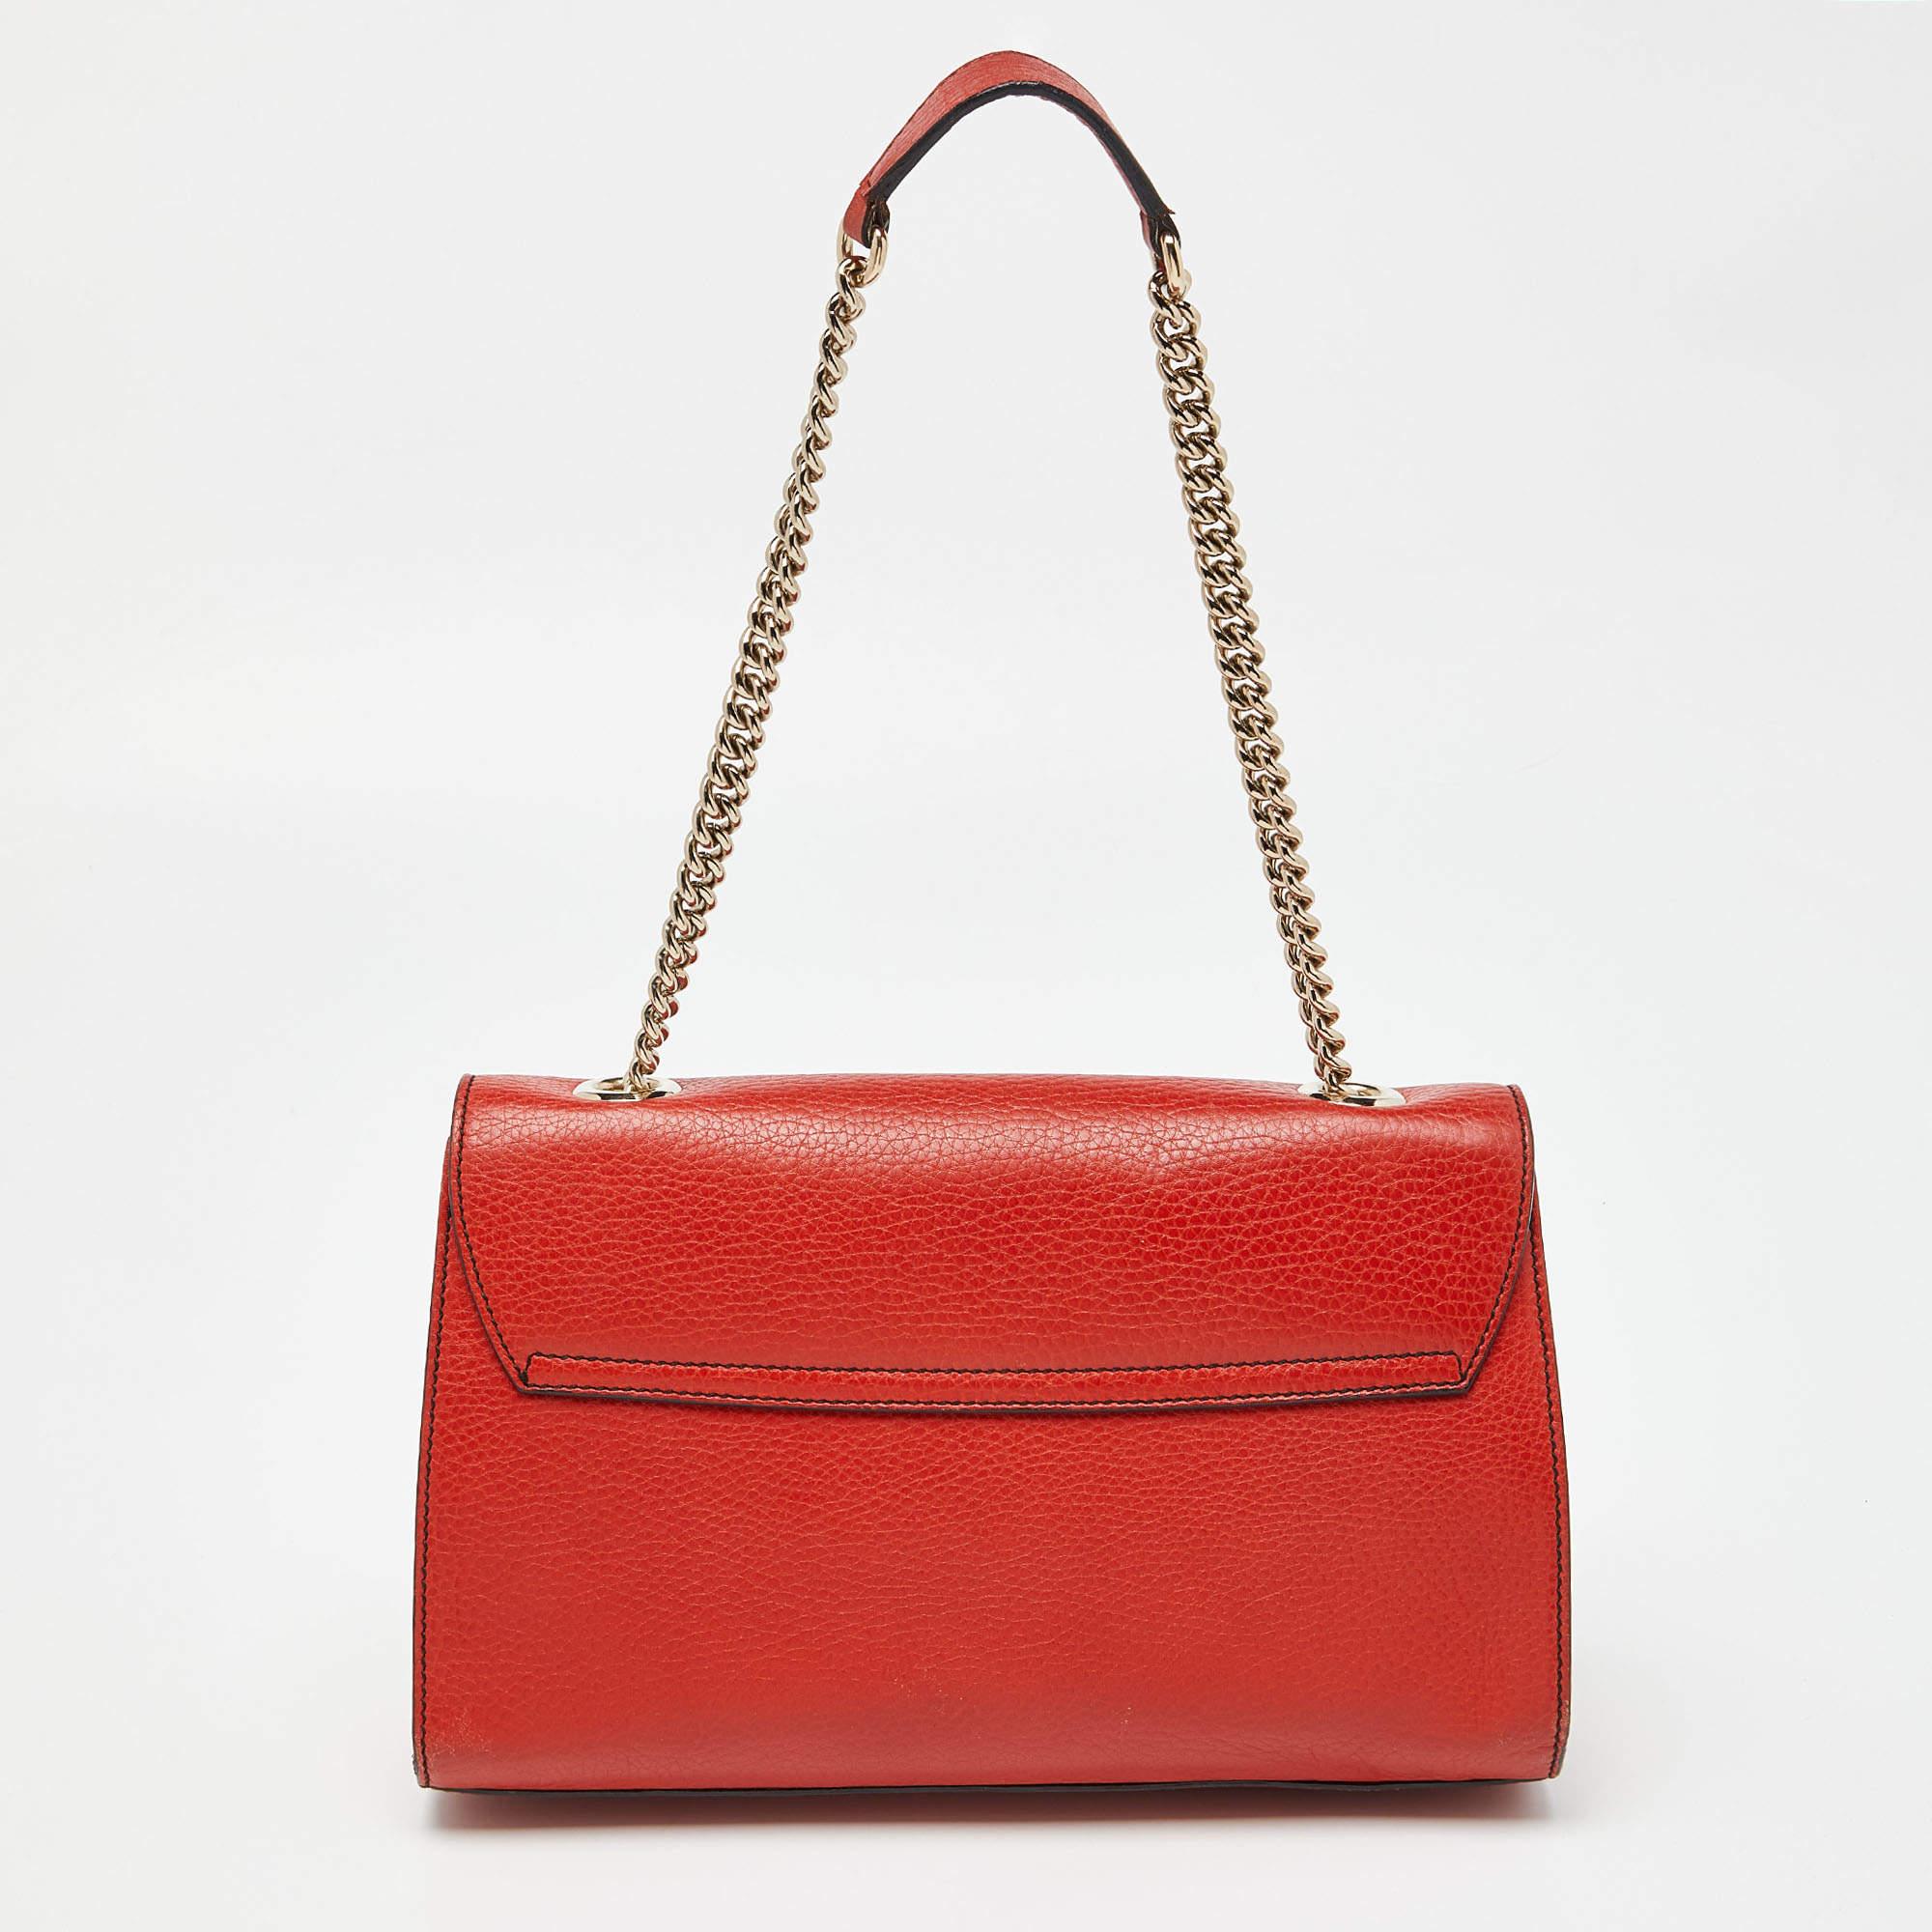 Gucci Coral Red Leather Medium Emily Shoulder Bag 5